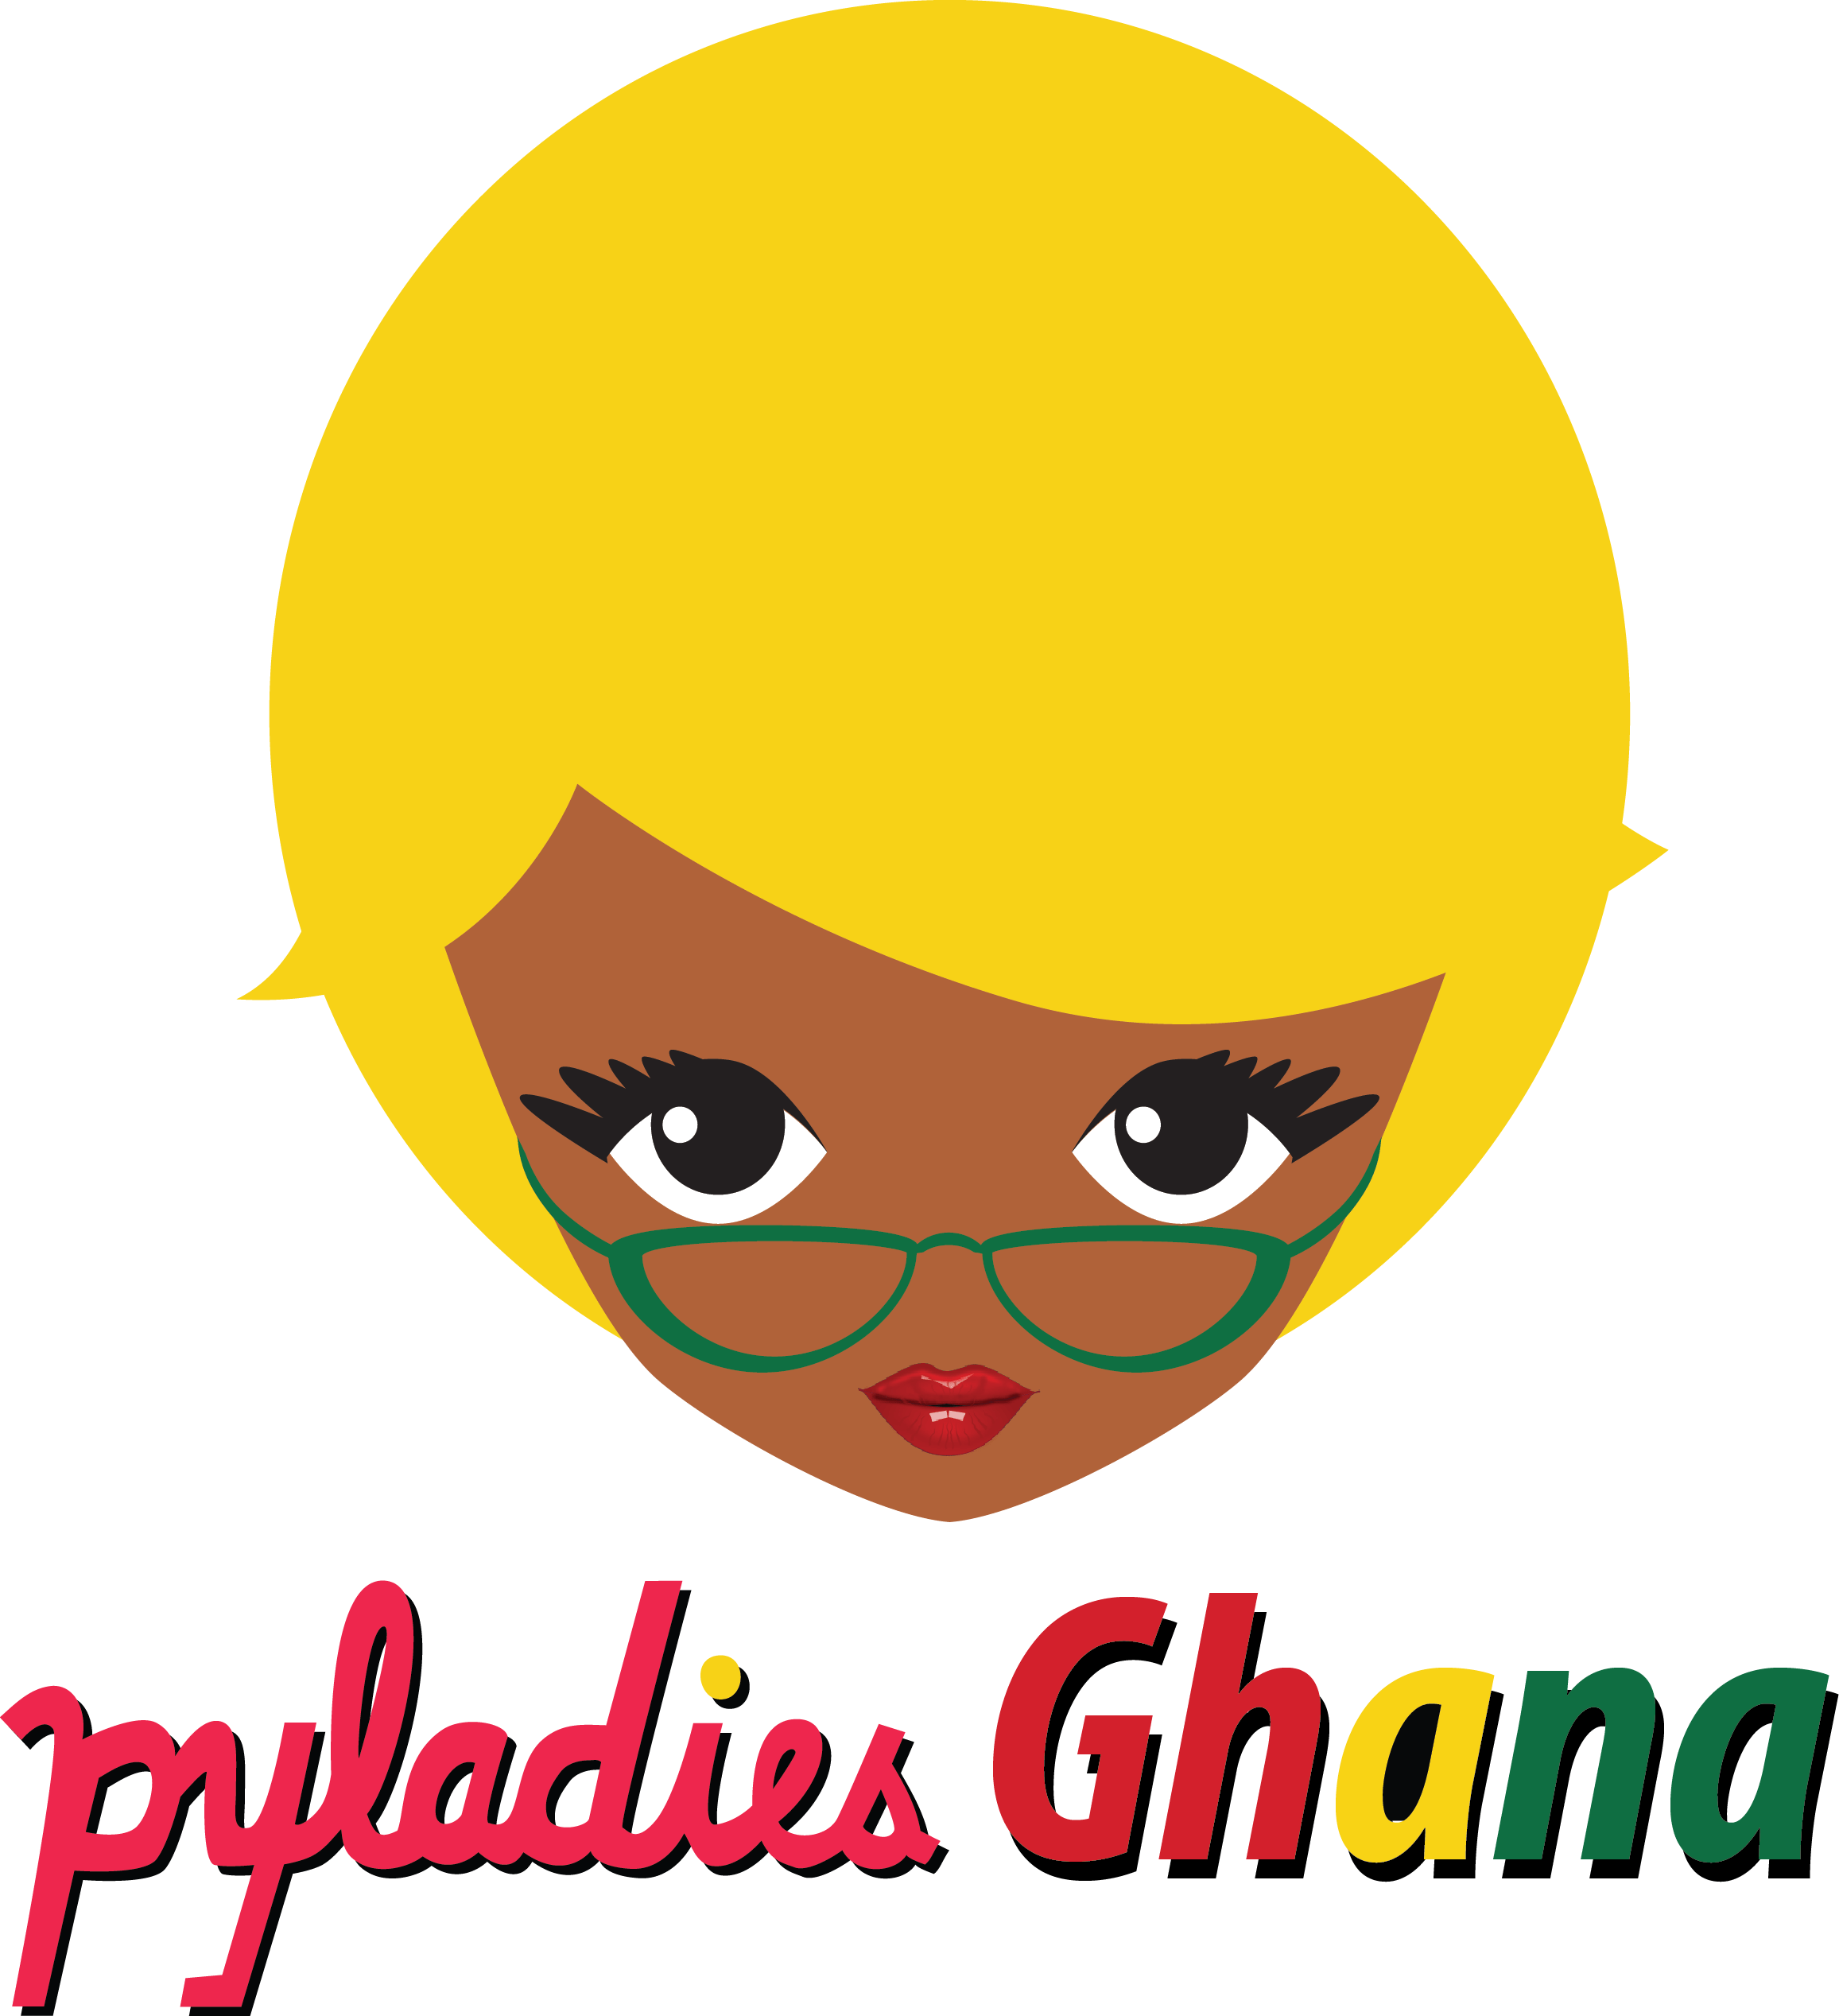 PyLadies Ghana